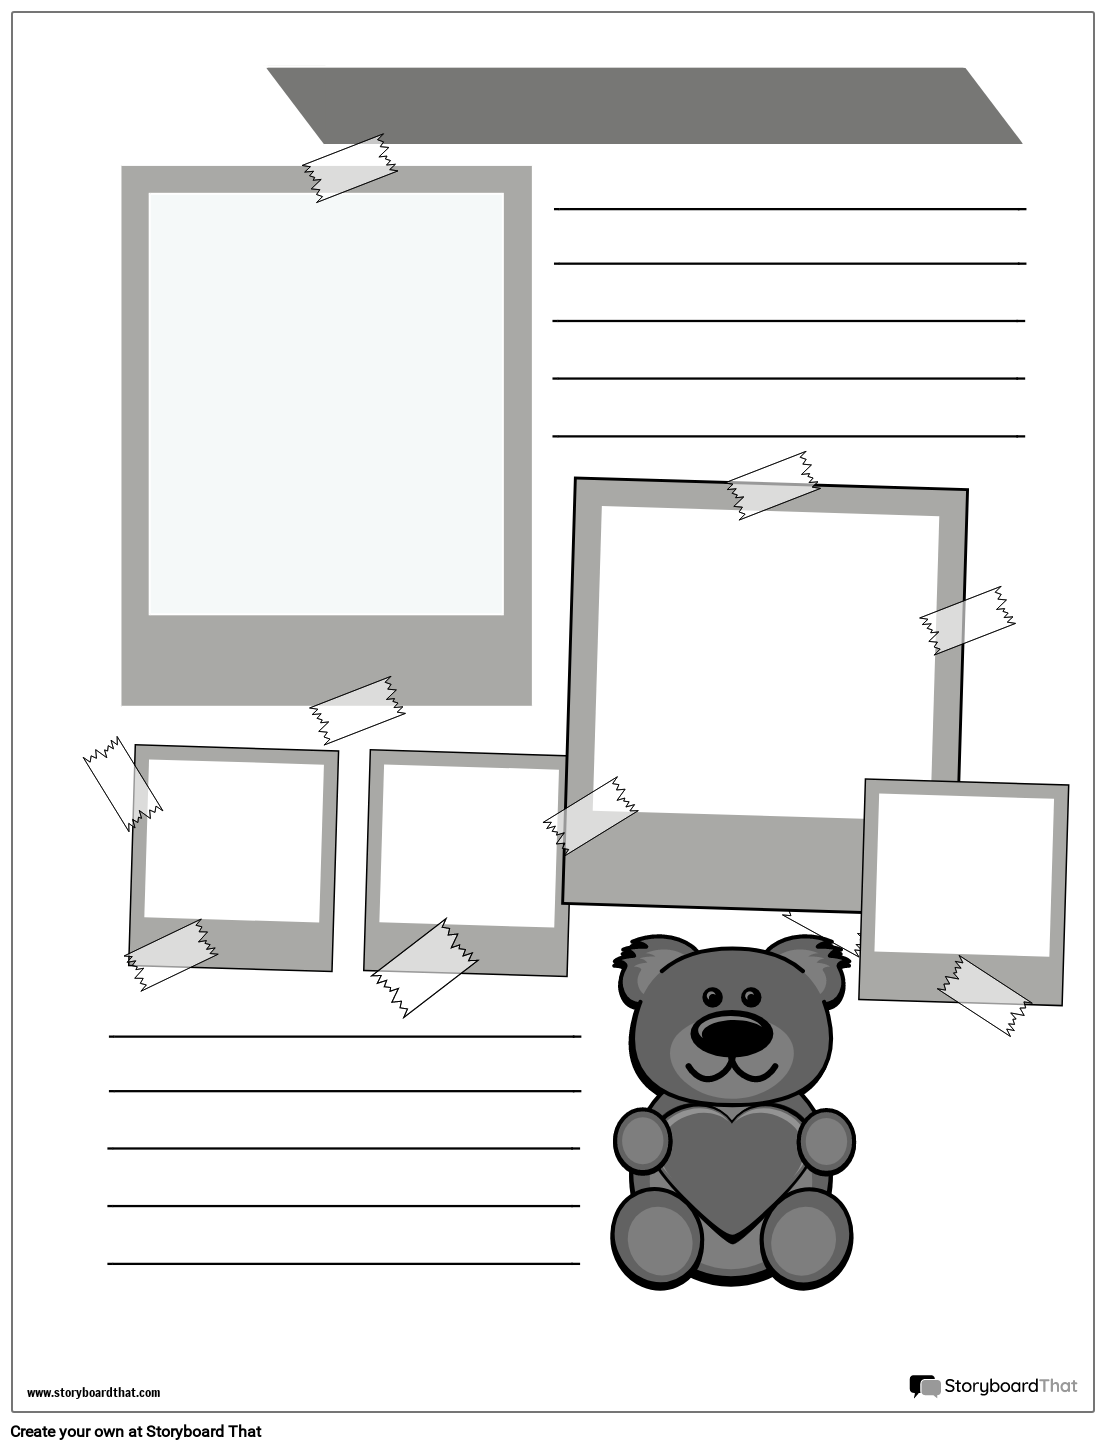 Scrapbook Project Template Featuring a Teddy Bear